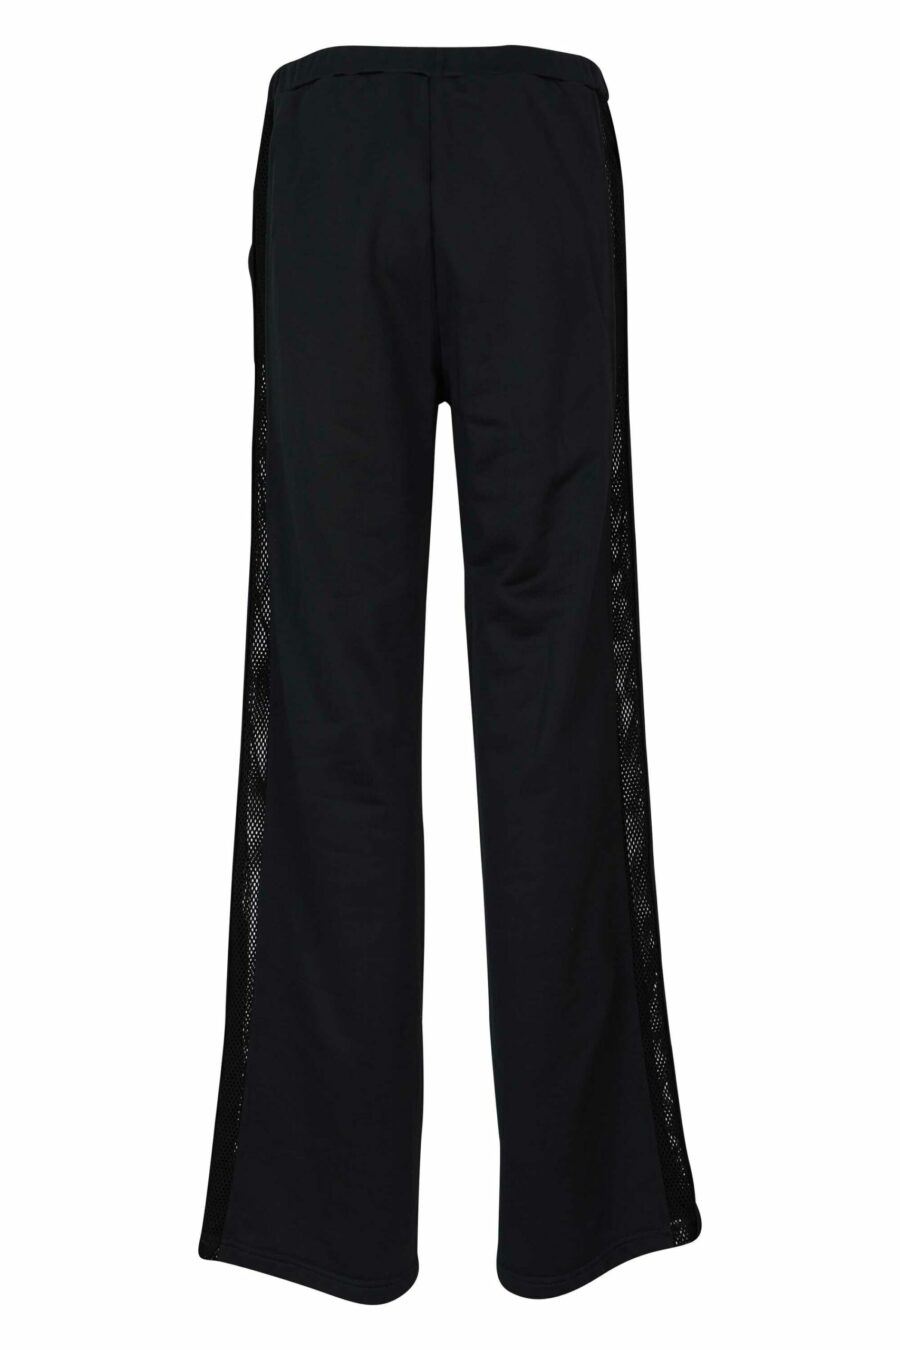 Pantalon large noir avec logo - 8054148457945